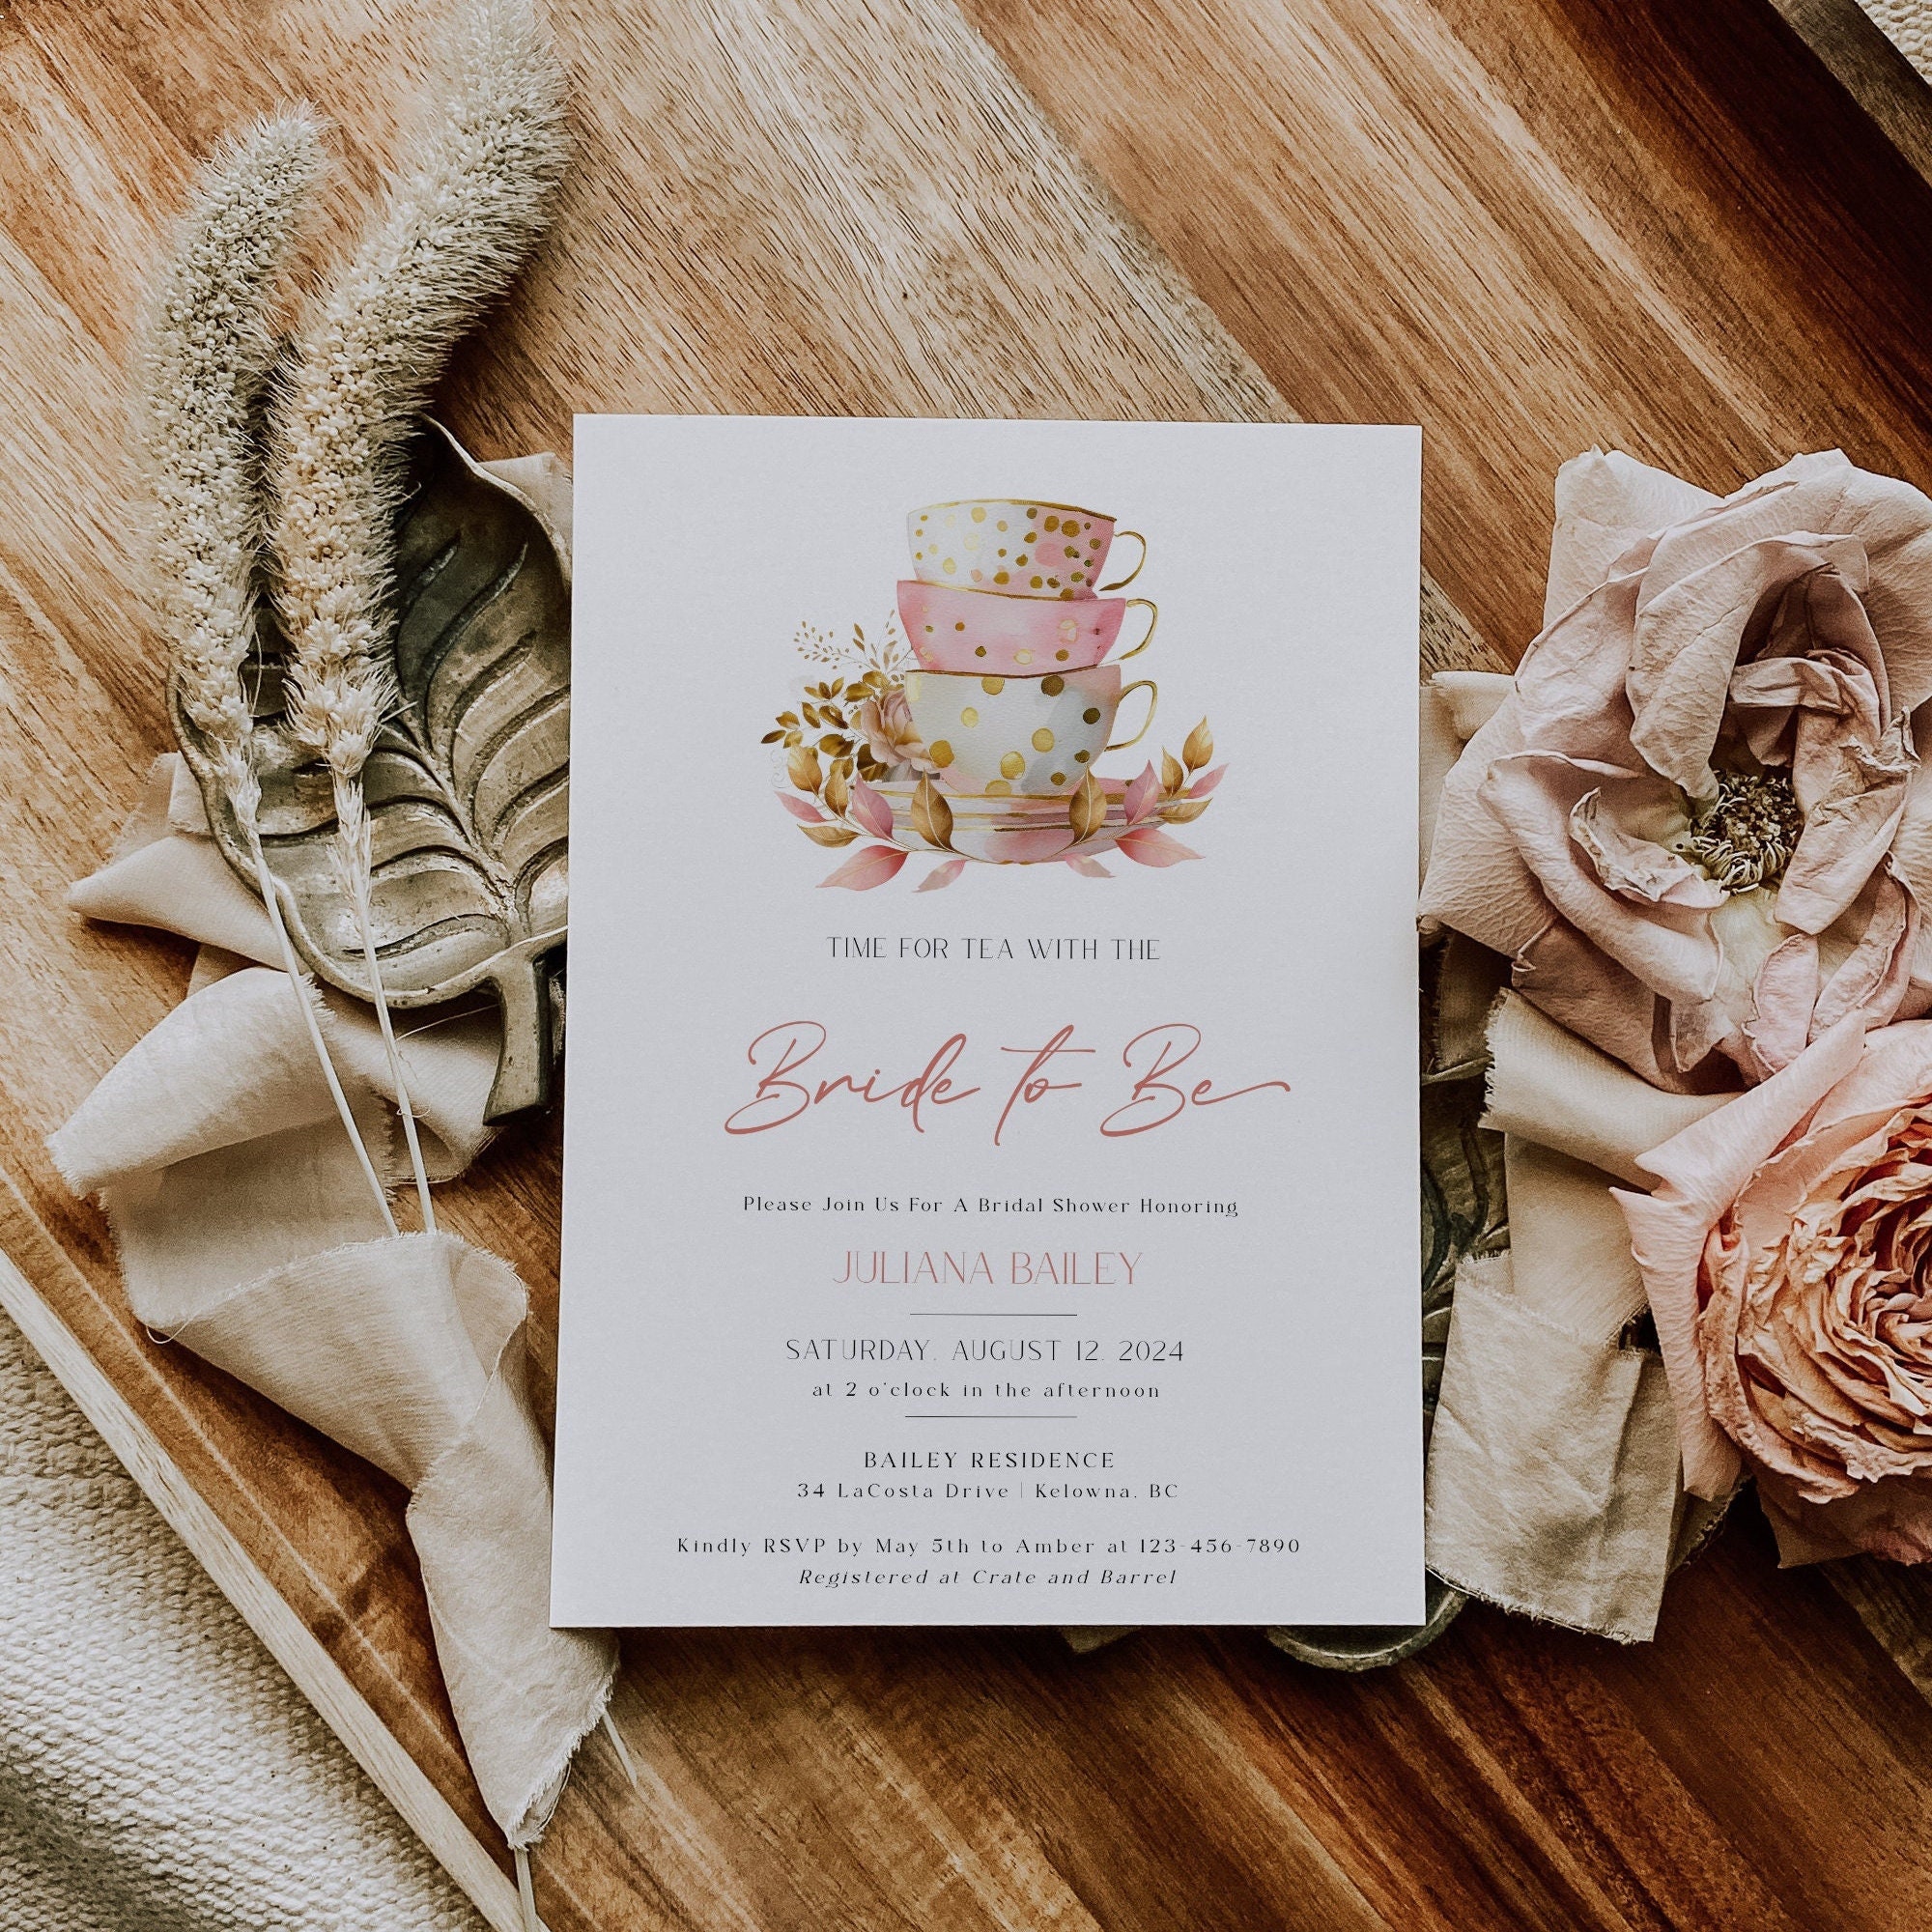 Roxx Designs - Rose Bridal Shower Invitation - Garden pink rose blush  bridal invite - Roxx Designs